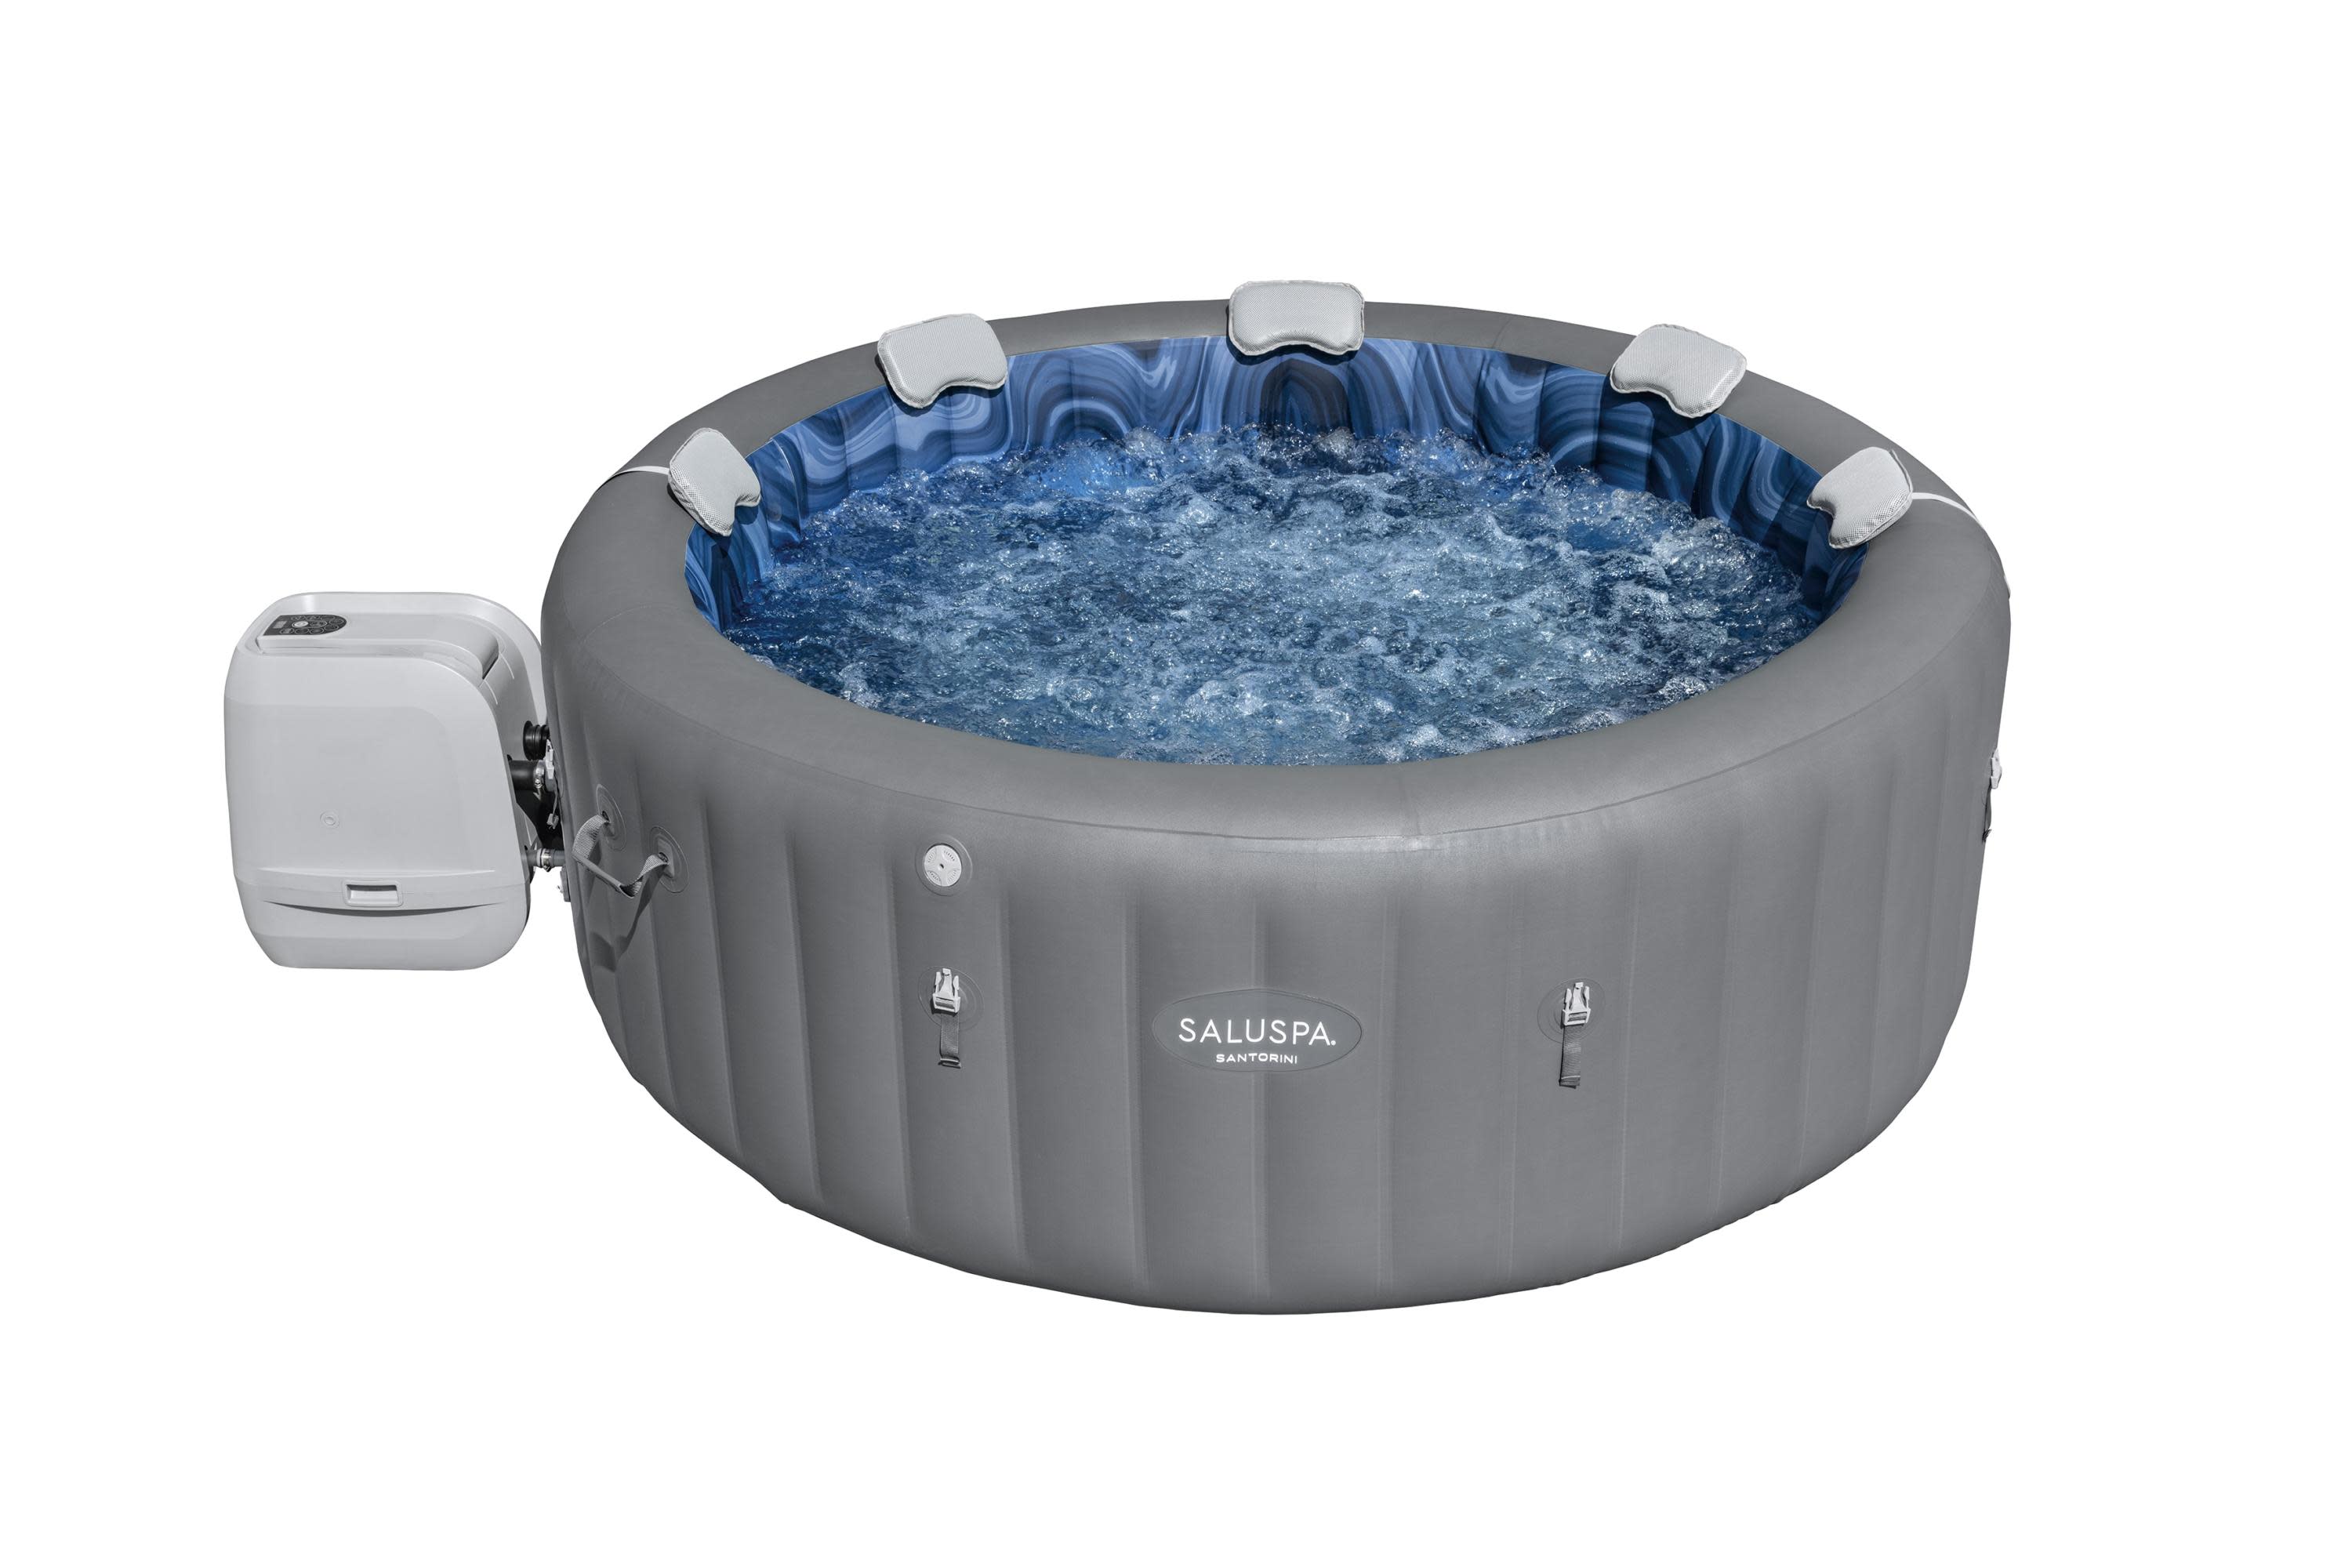 SaluSpa Santorini Inflatable Hot Tub with ColorJet LED Light 5-7 person, Maximum Temperature of 104˚F - image 1 of 14